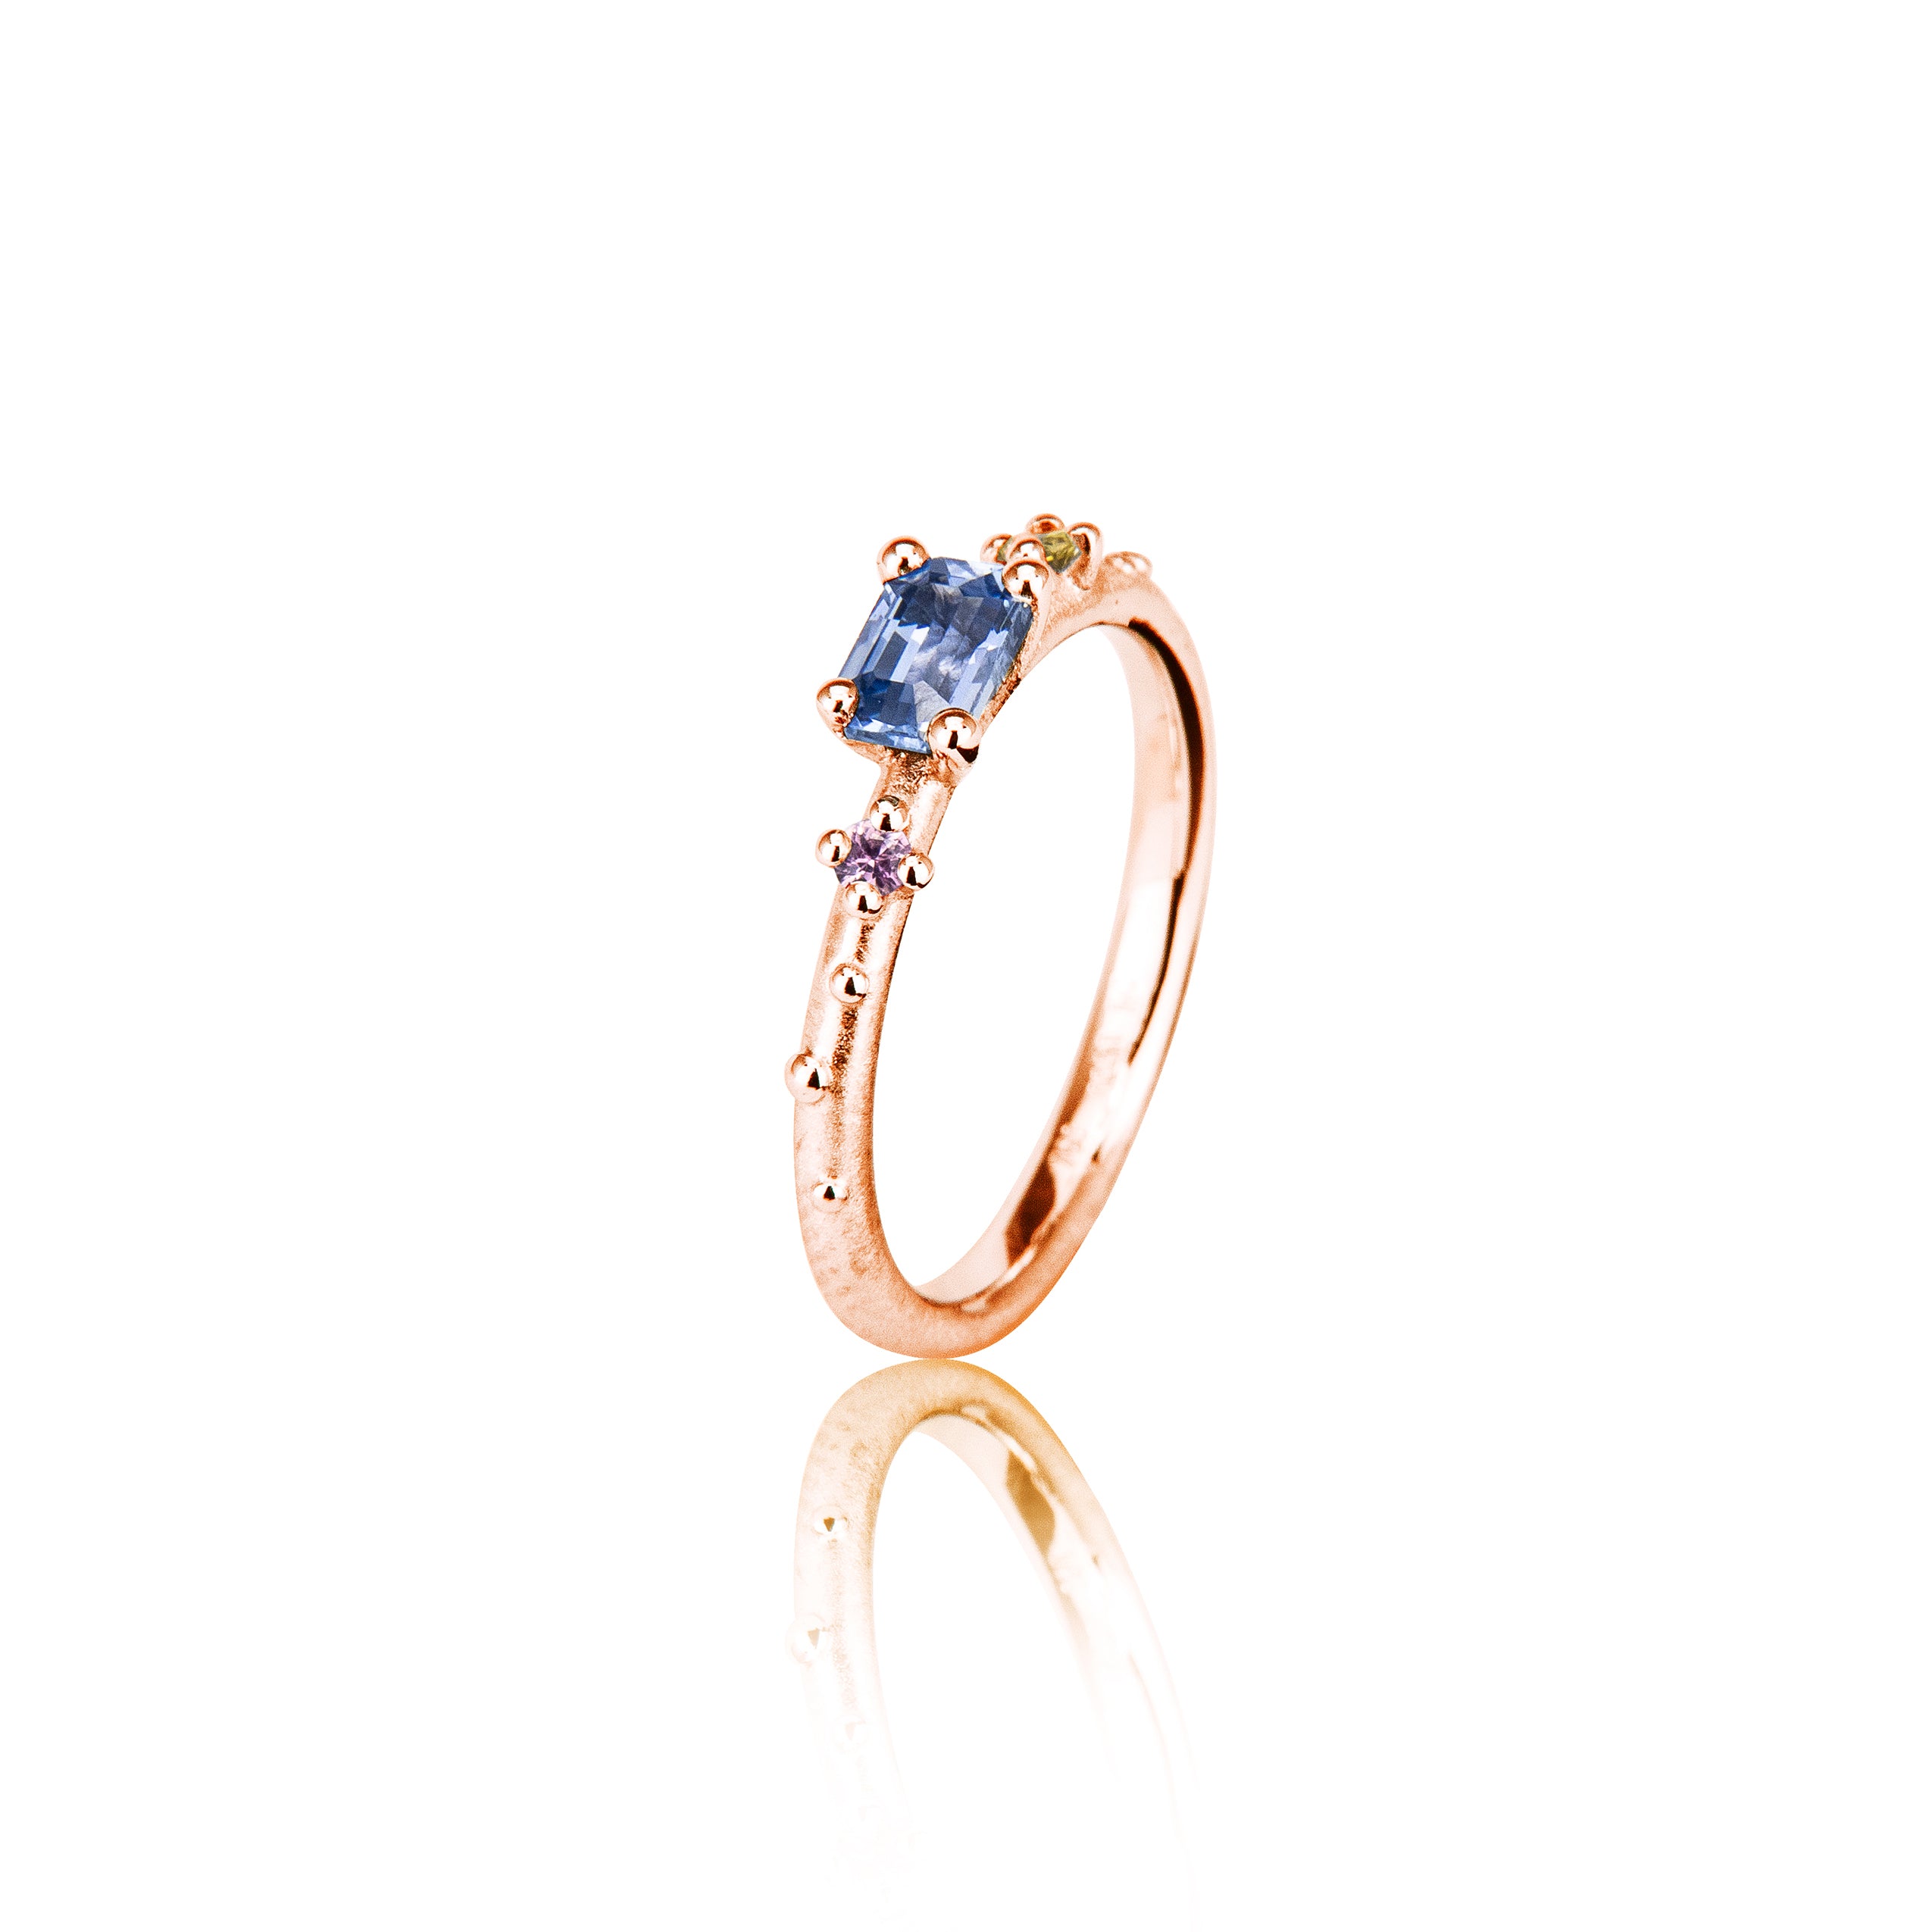 Shine-ring "smaragdblå" i guld med safirer